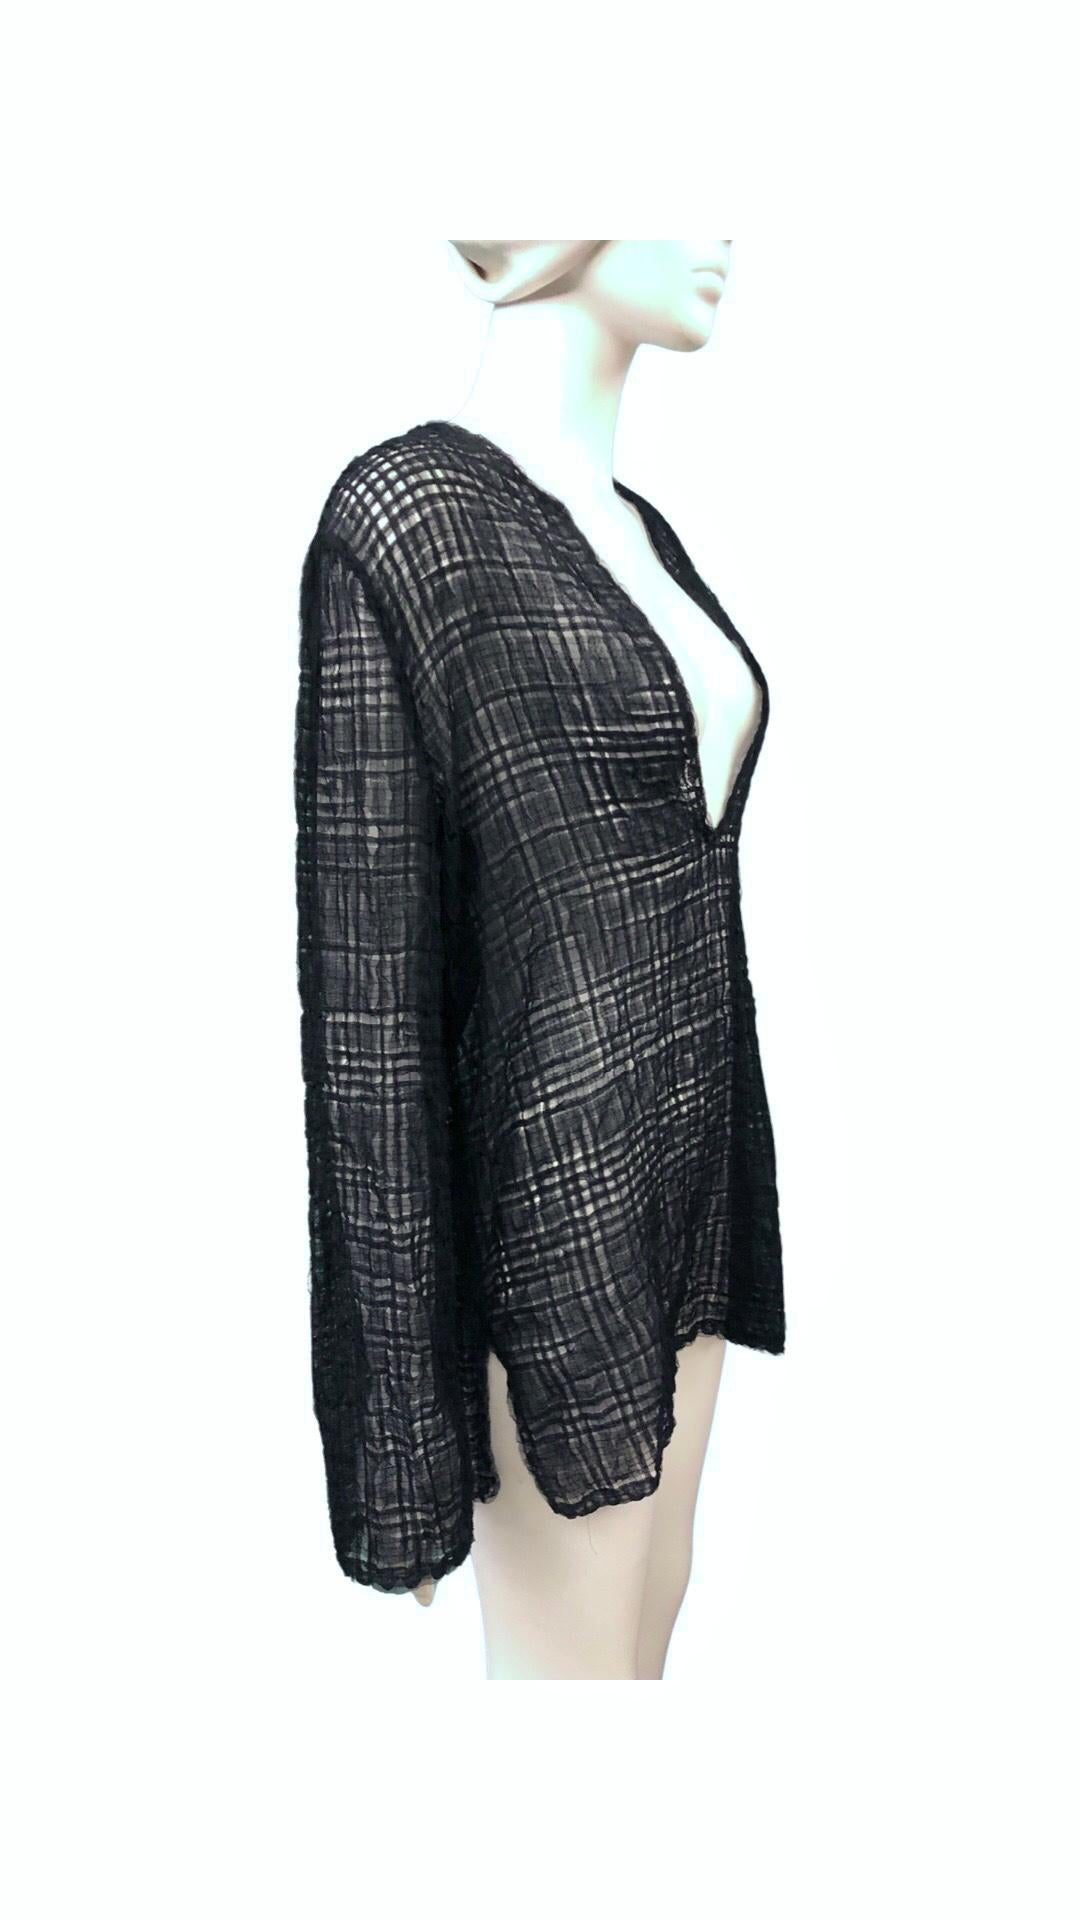 - Gucci by Tom Ford spring/summer 1997 black mesh long sleeves tunic dress. 

- Size L. 

- 100% Nylon. 

